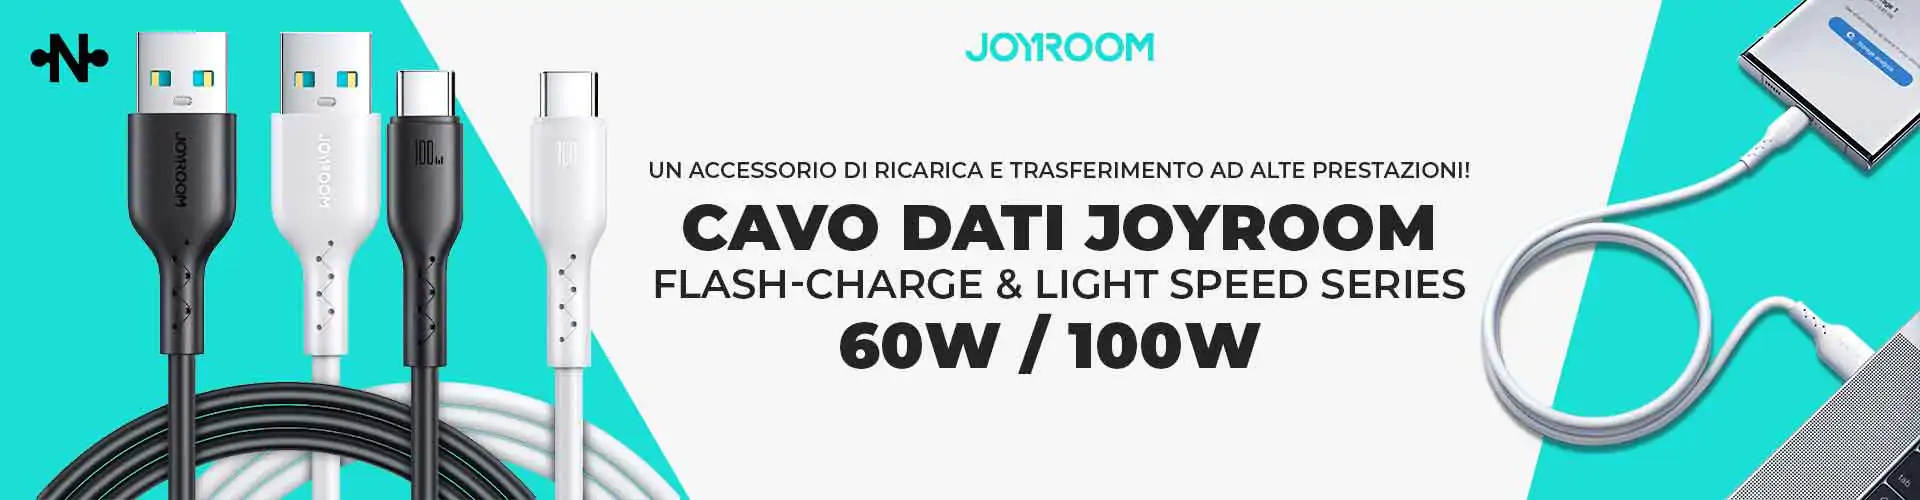 cavo dati JOYROOM
Flash-Charge & Light speed Series
60W / 100W